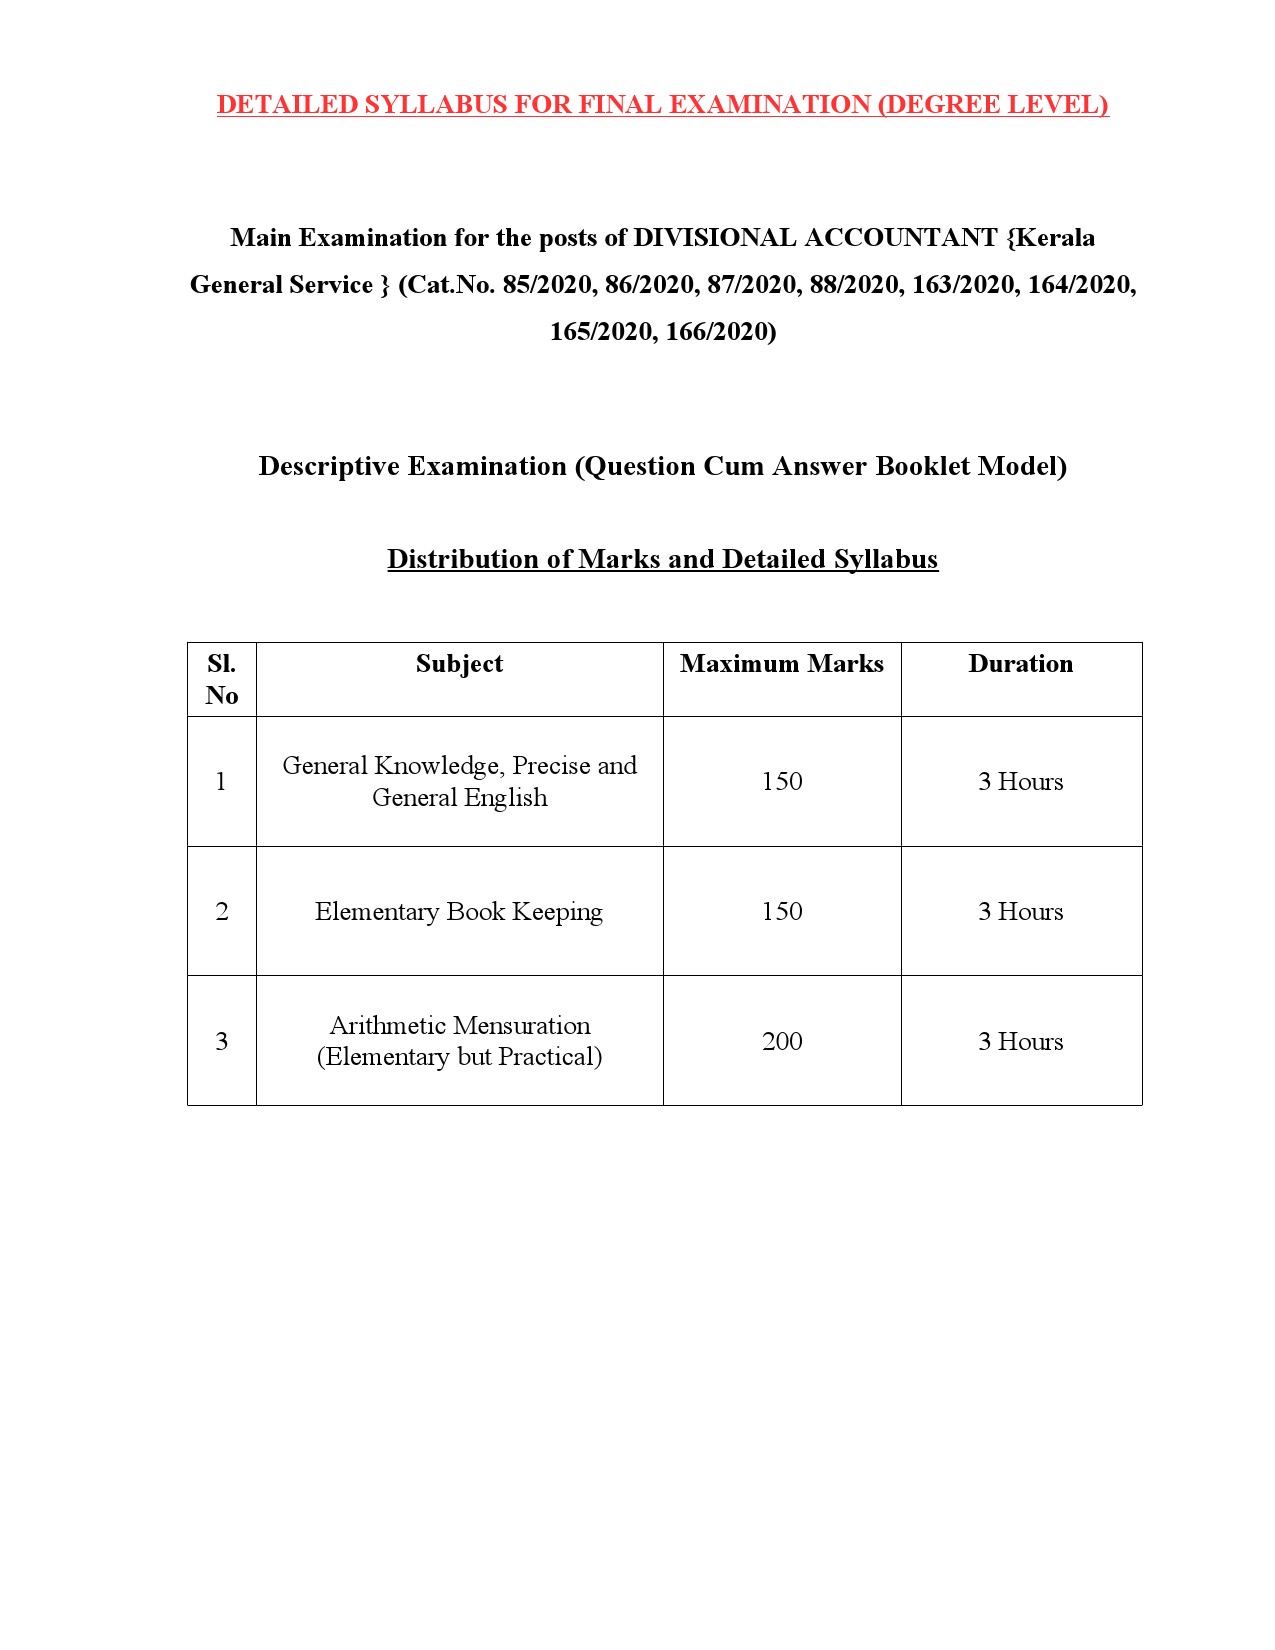 KPSC Degree Level Main Exam Syllabus Divisional Accountant - Notification Image 1